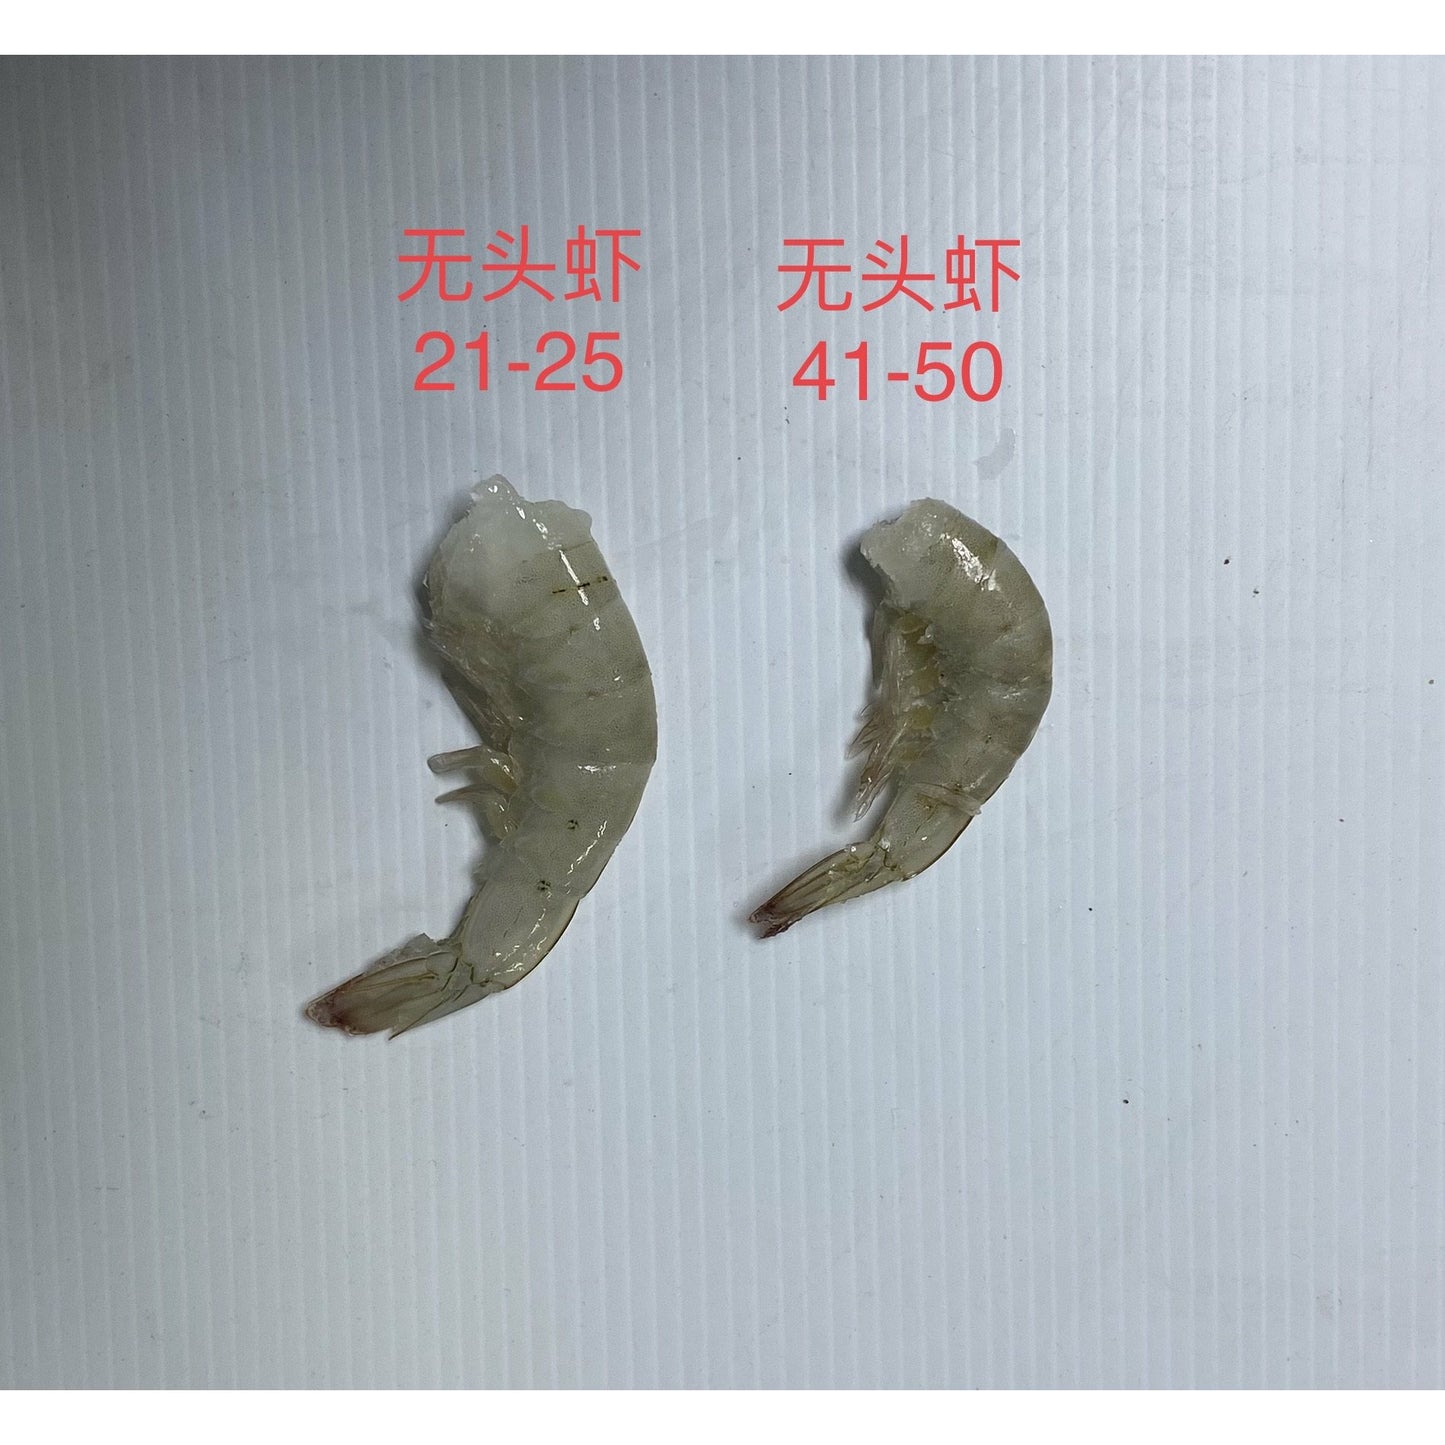 21-25 large headless shrimp (about 1.9-2lbs)